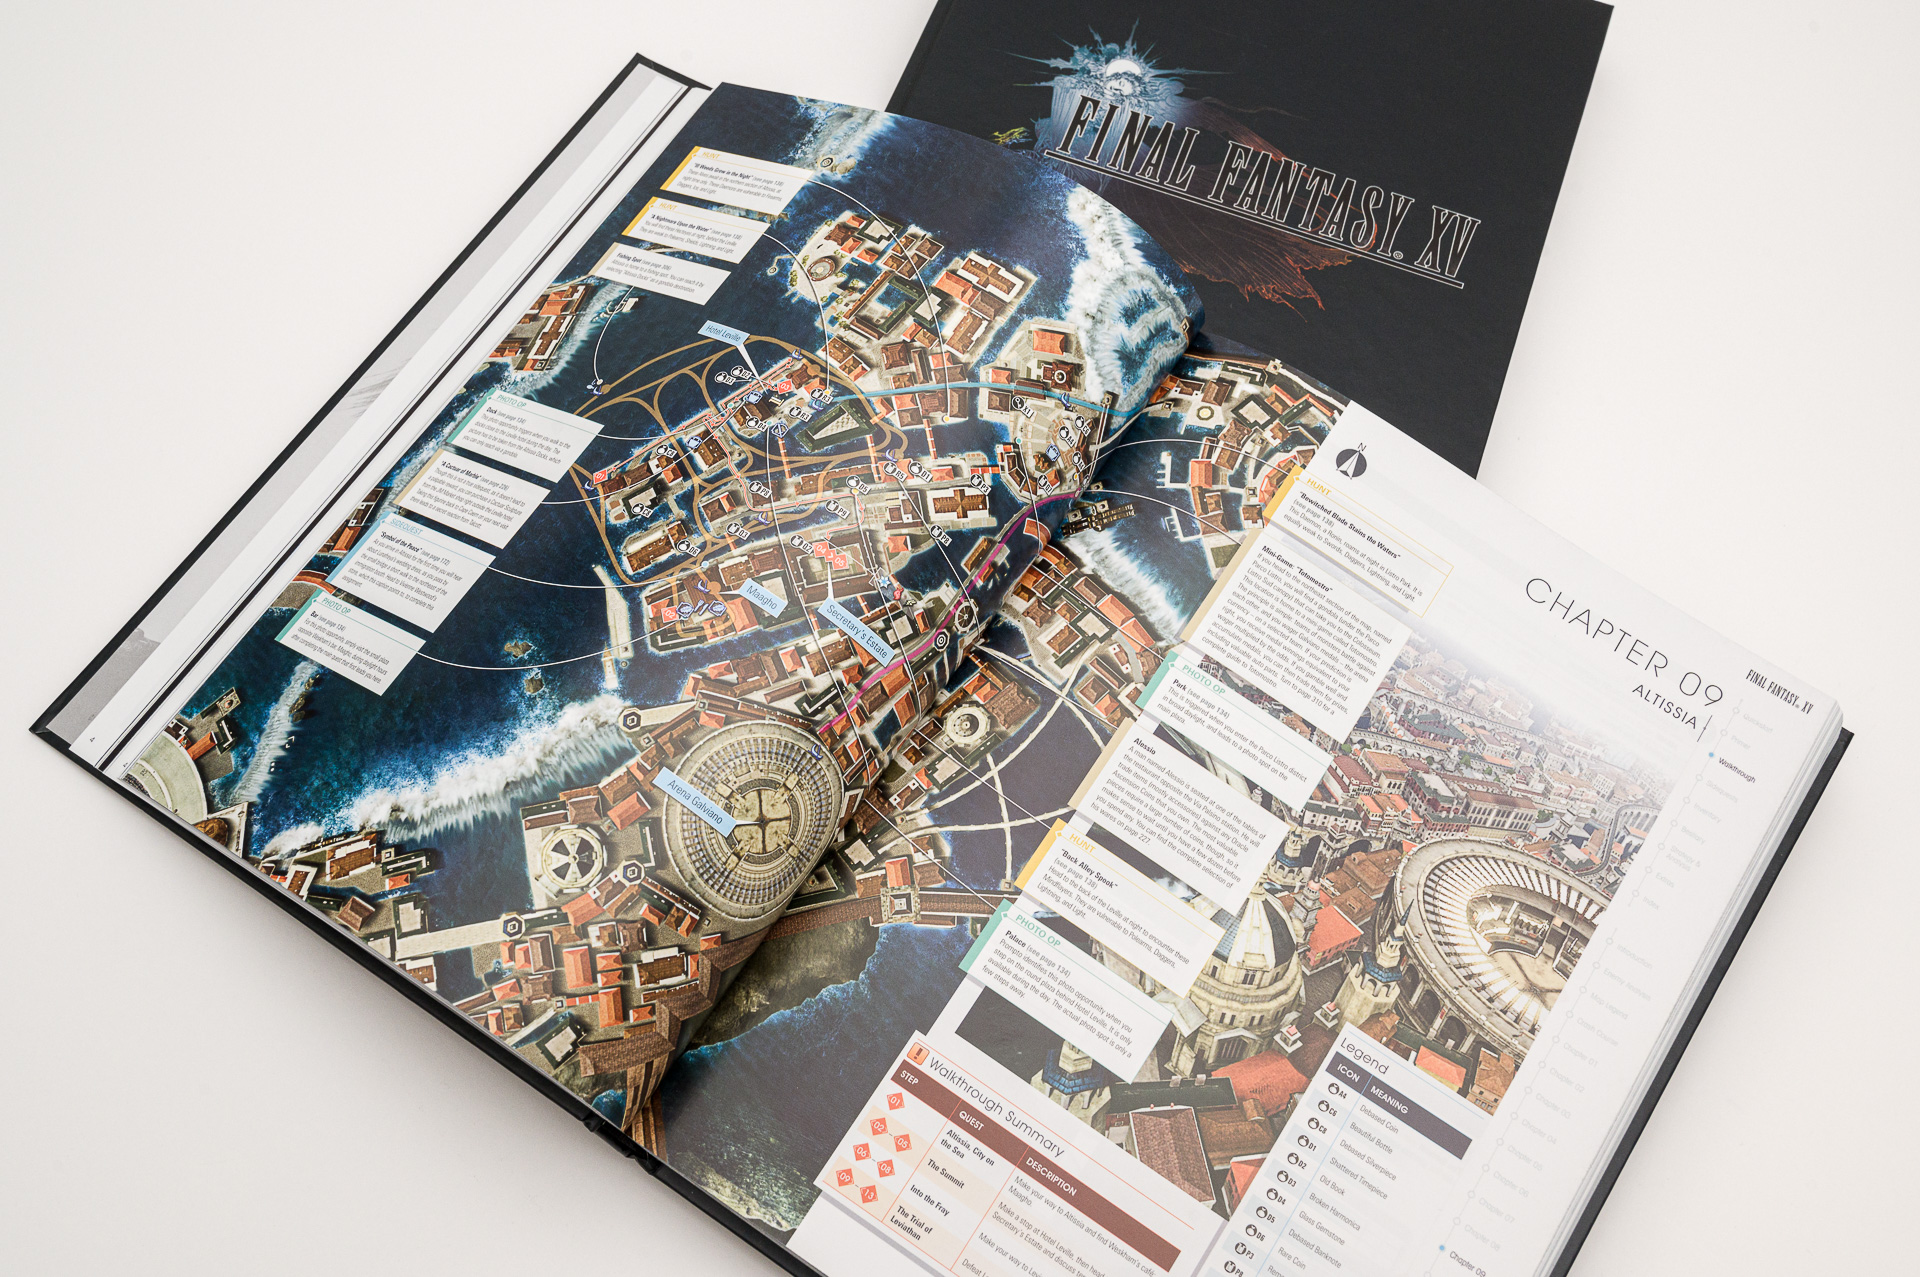 final fantasy xv royal edition strategy guide pdf download